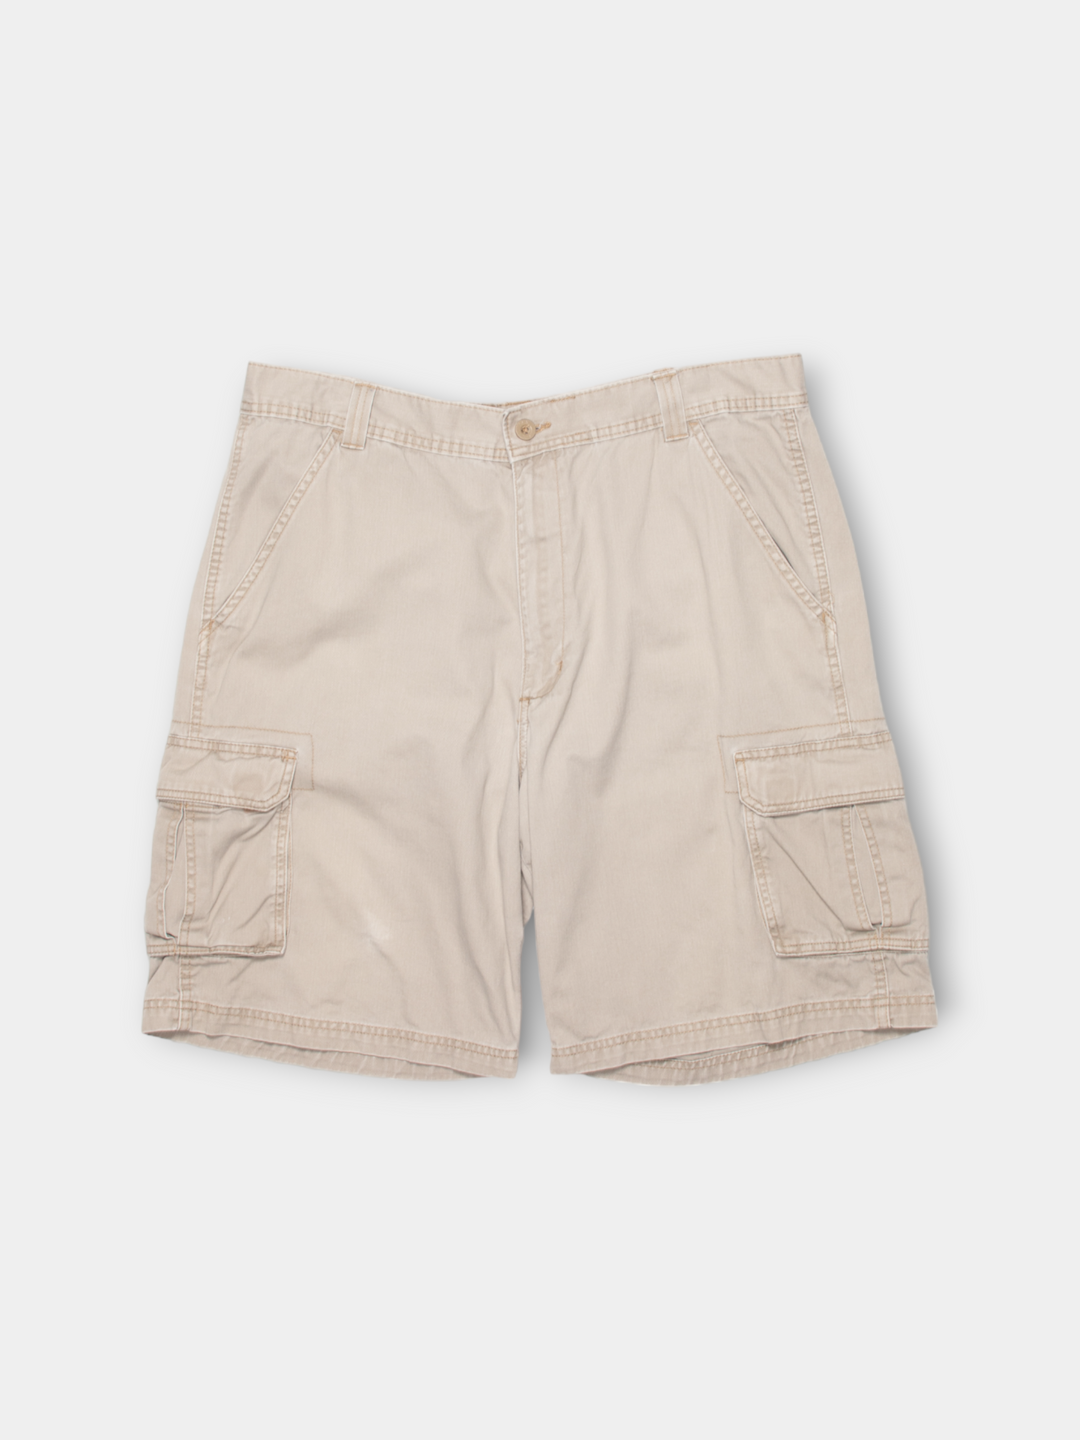 Vintage Wrangler Cargo Shorts (36")